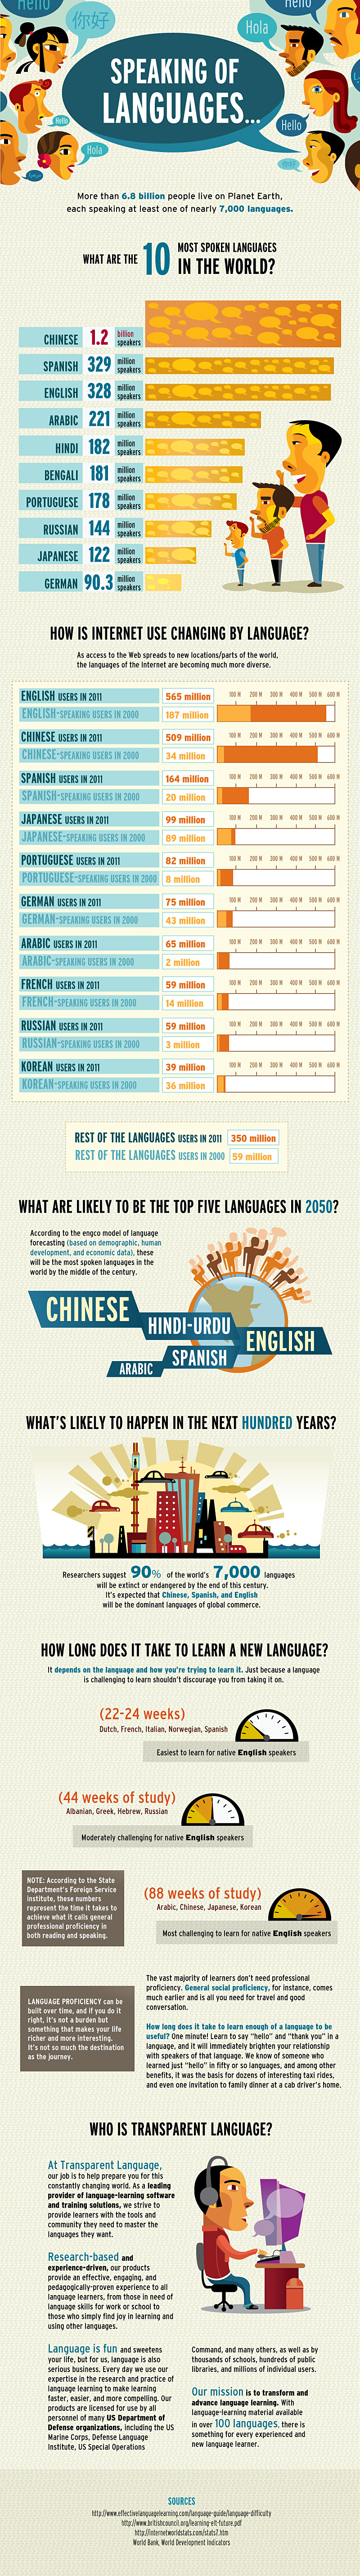 Speaking of Languages - Infographic